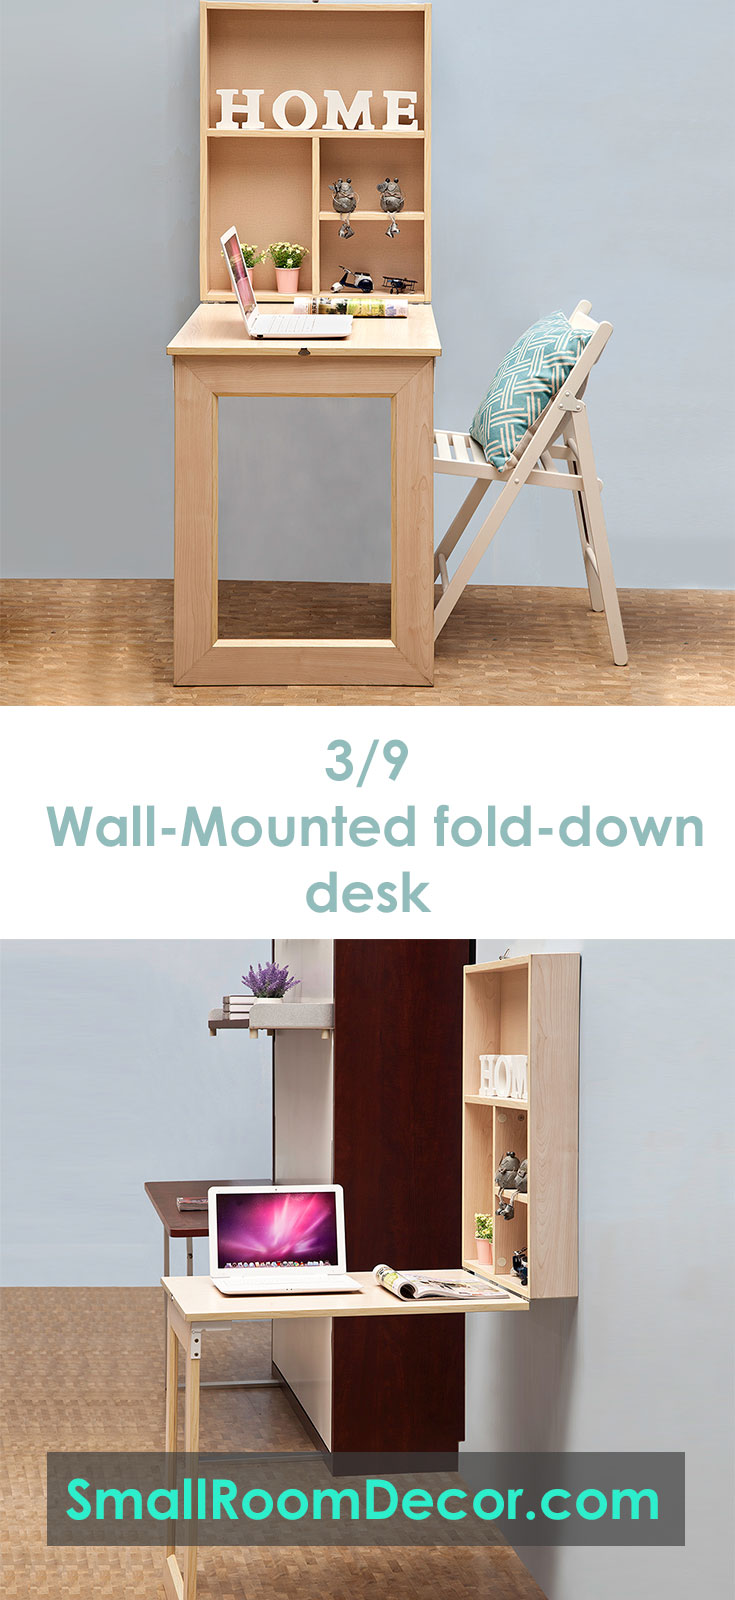 Wall Mounted fold down desk in small bedroom #bedroomfurnitureideas